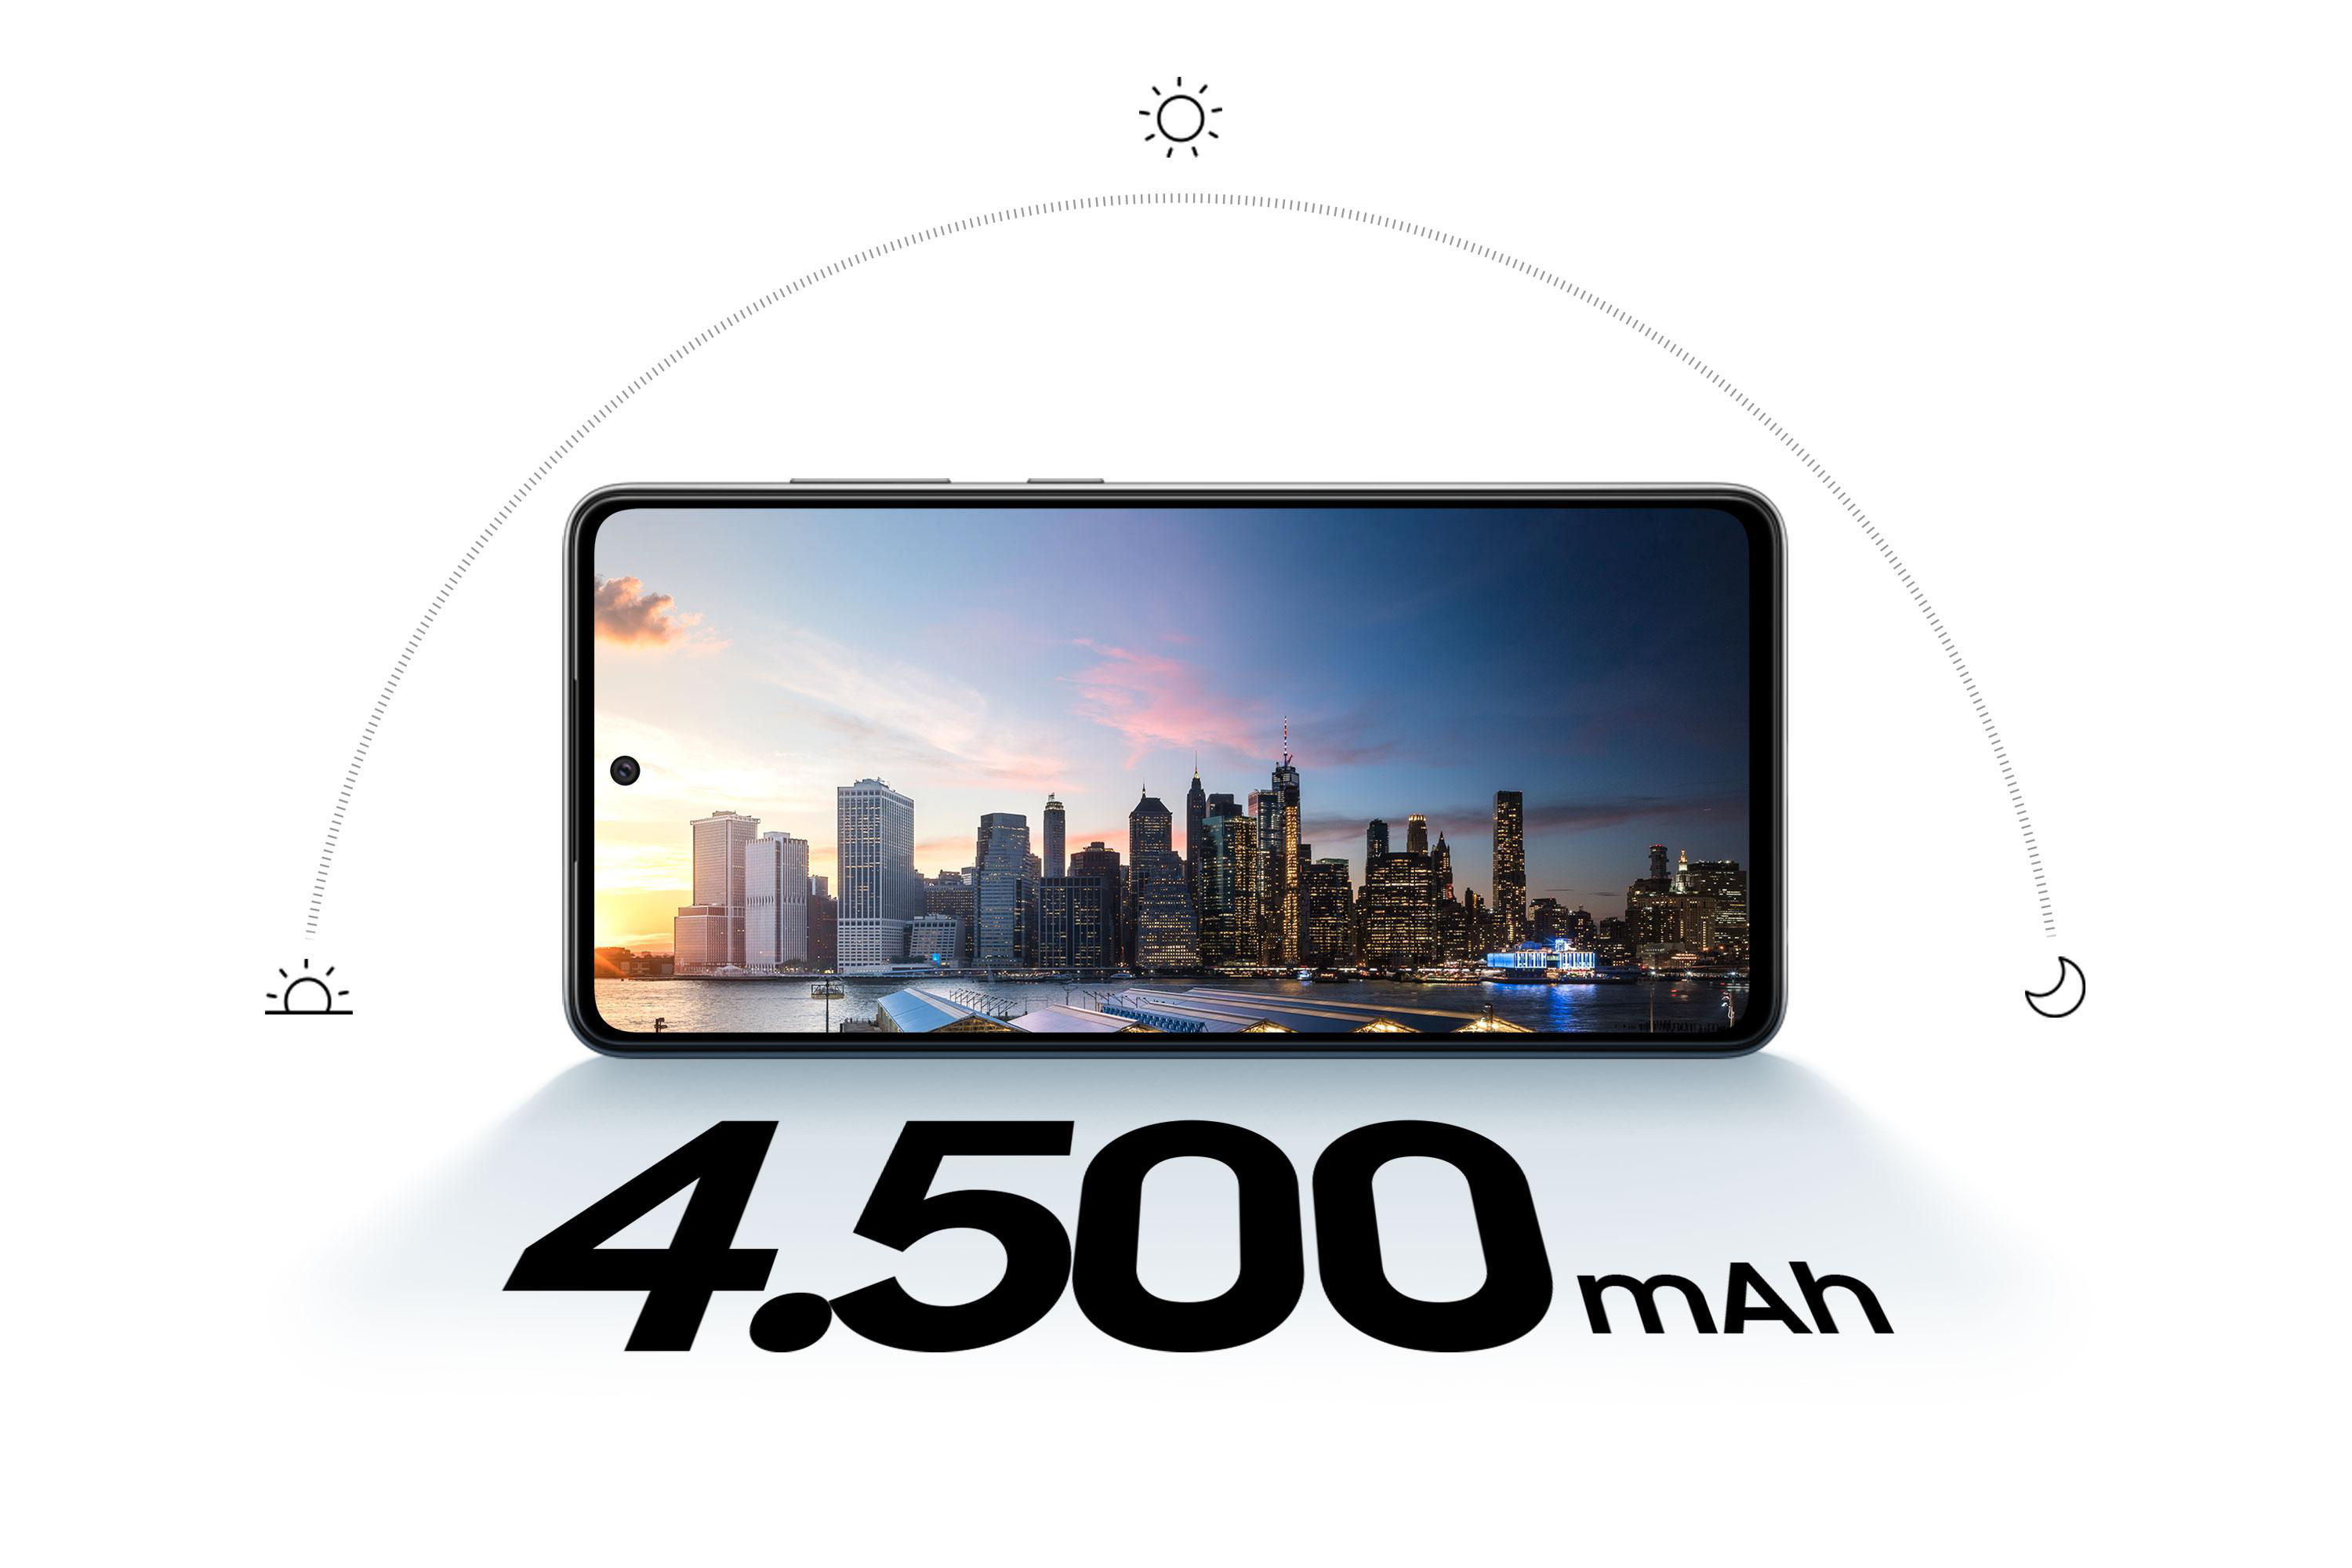 SAMSUNG Galaxy A52 GB Dual SIM Awesome White 128 5G